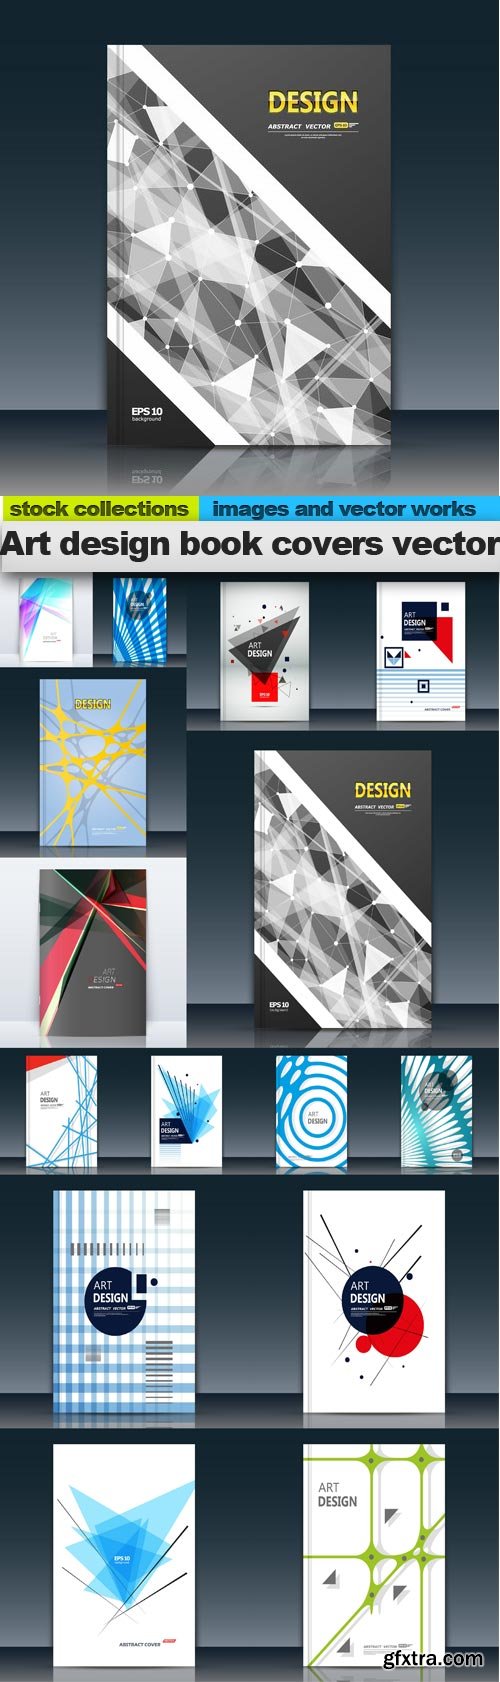 Art design book covers vector, 15 x EPS